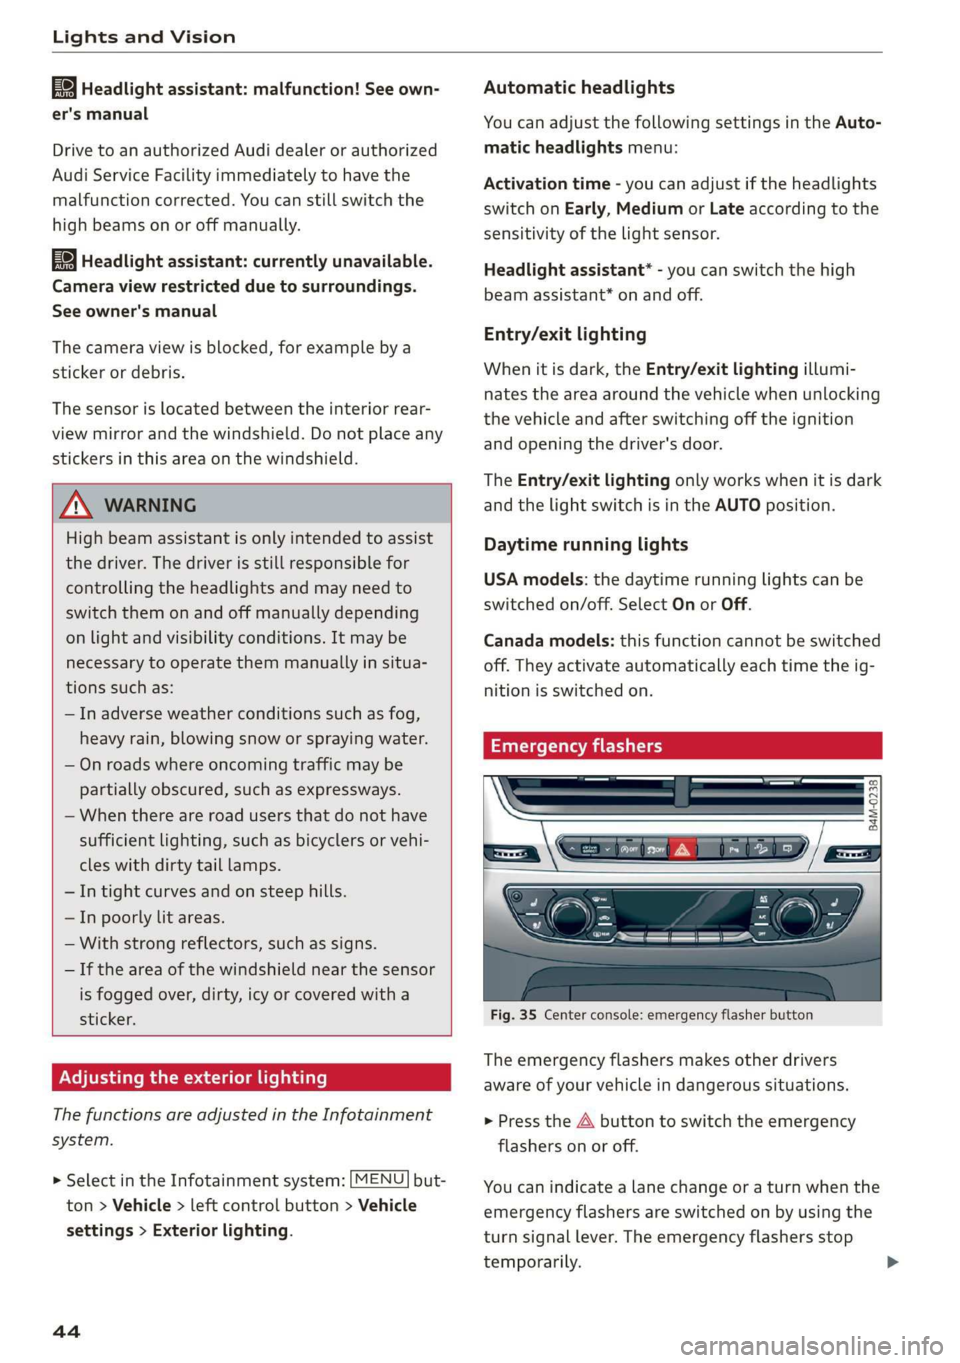 AUDI Q7 2019  Owner´s Manual LightsandVision
 
Headlightassistant:malfunction!Seeown-
er'smanual
DrivetoanauthorizedAudidealerorauthorized
AudiServiceFacilityimmediatelytohavethe
malfunctioncorrected.Youcanstillswitchthe
high